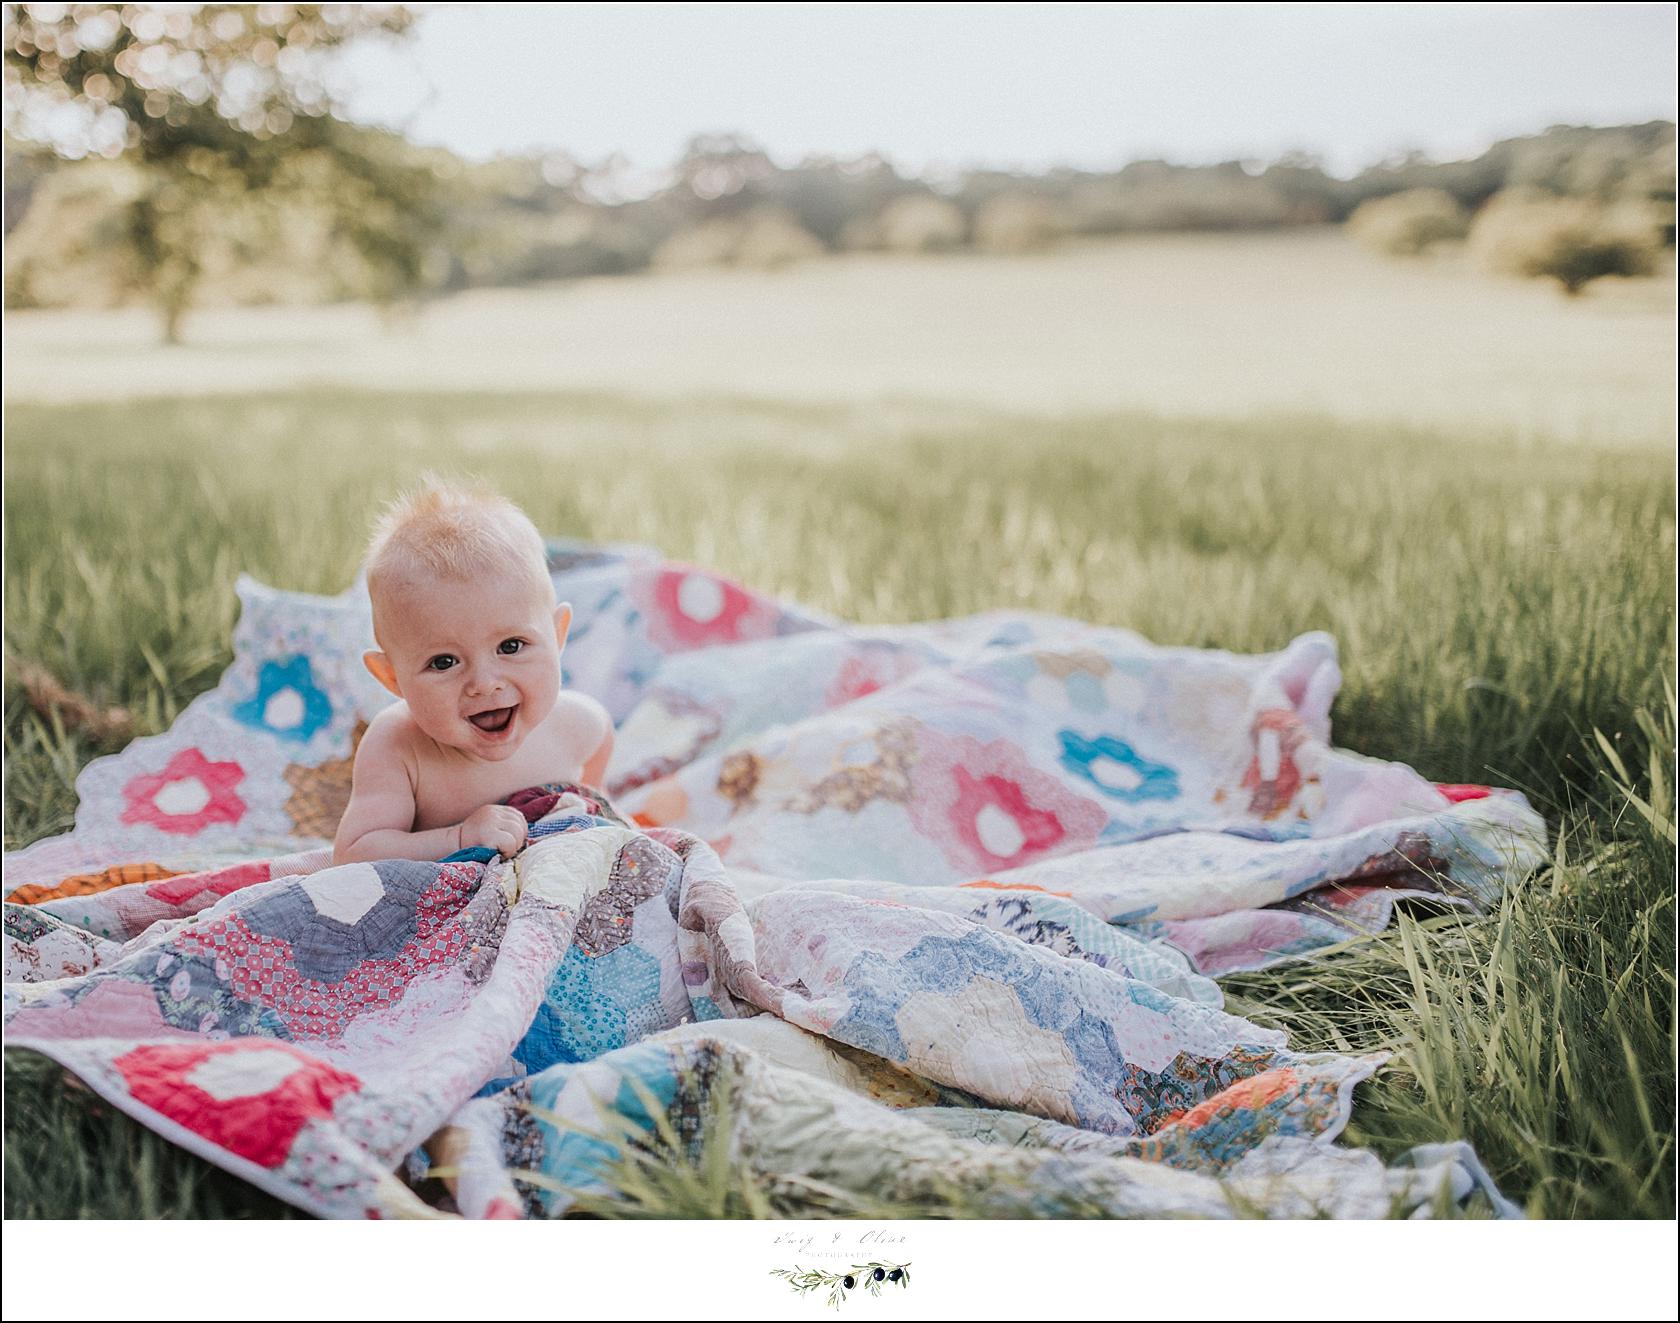 Baby on a blanket in a field